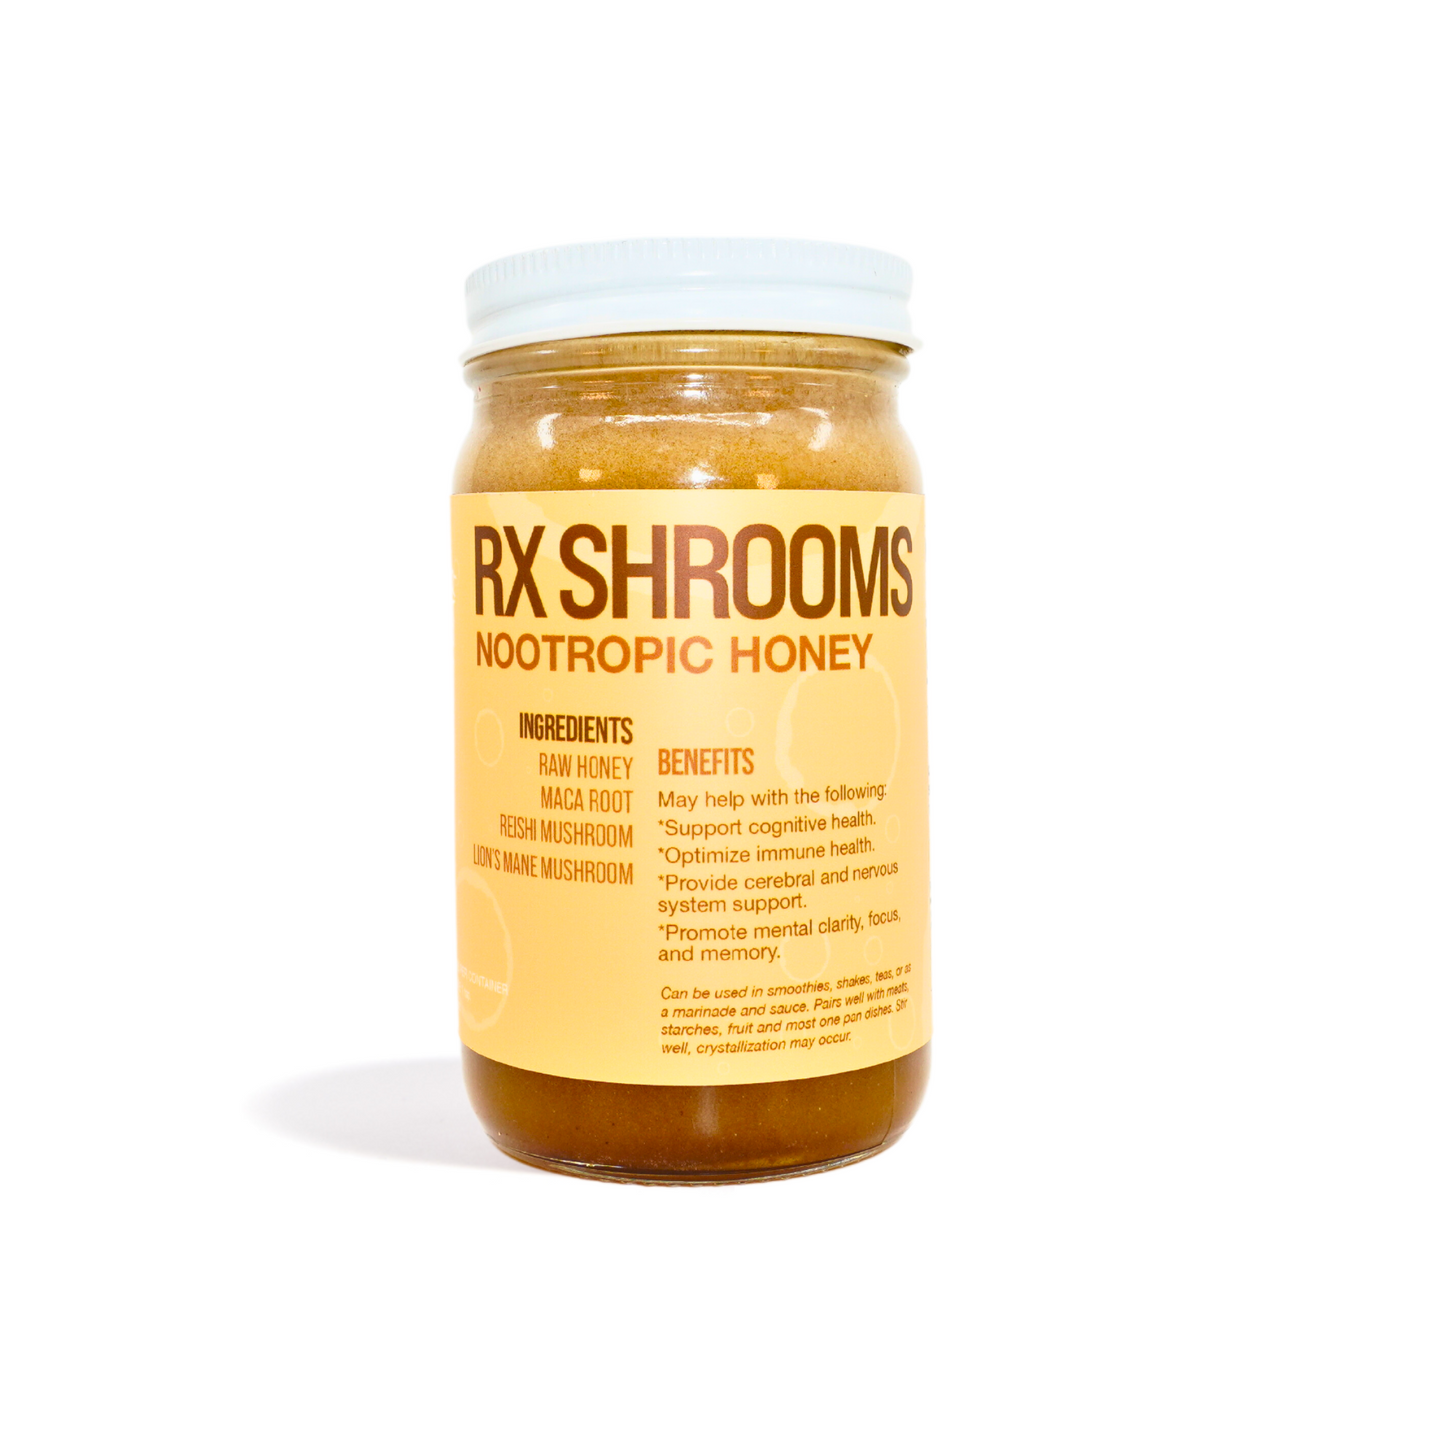 RX SHROOMS – NOOTROPIC HONEY